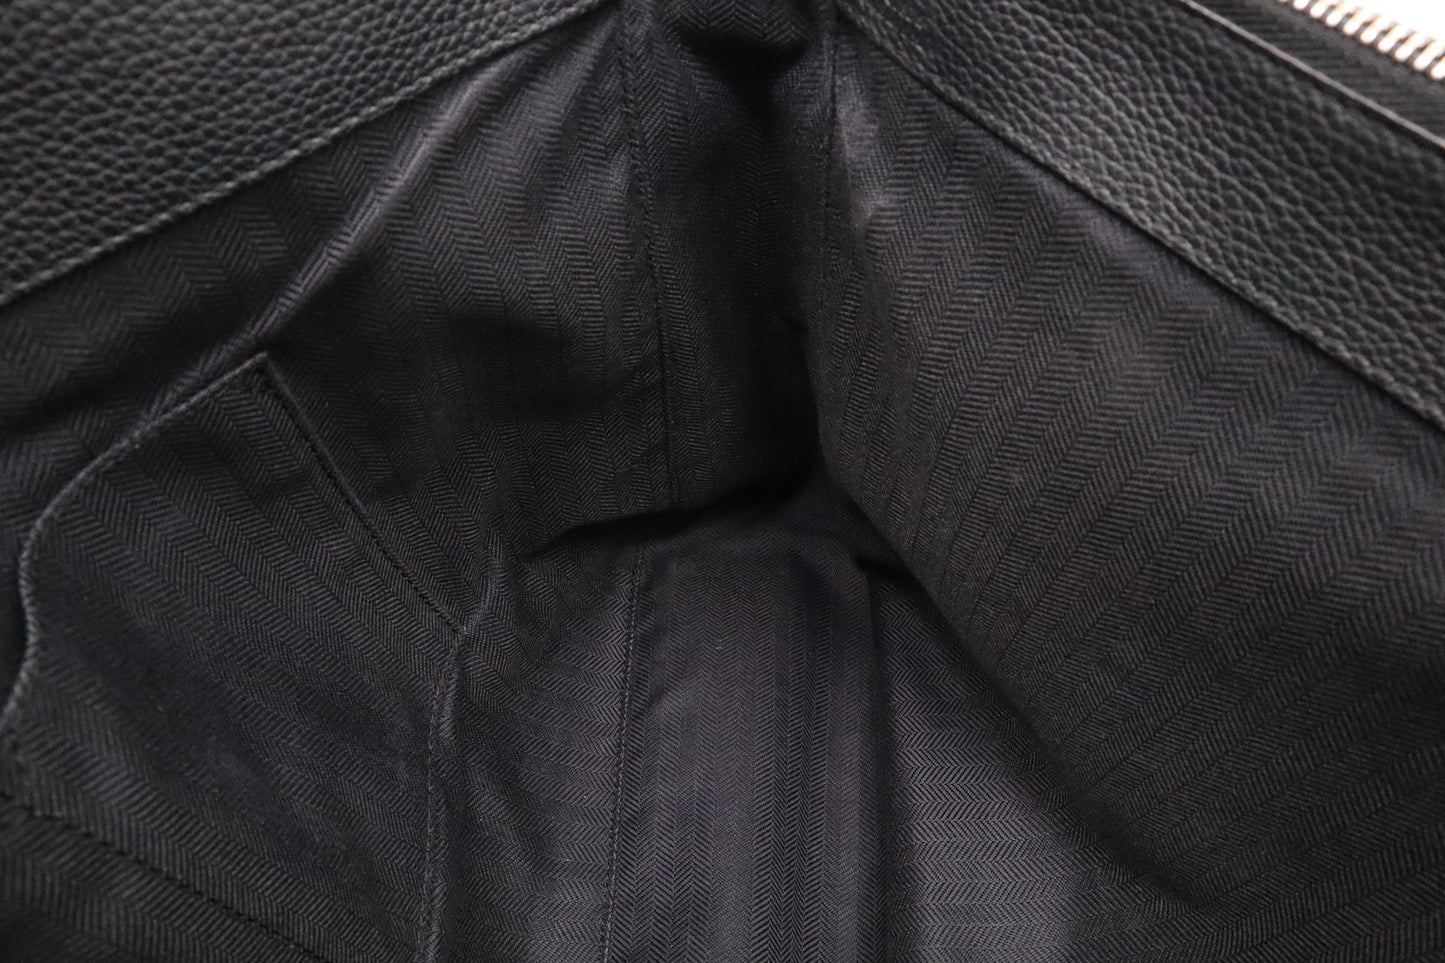 Loewe Puzzle Messenger Bag in Black Leather